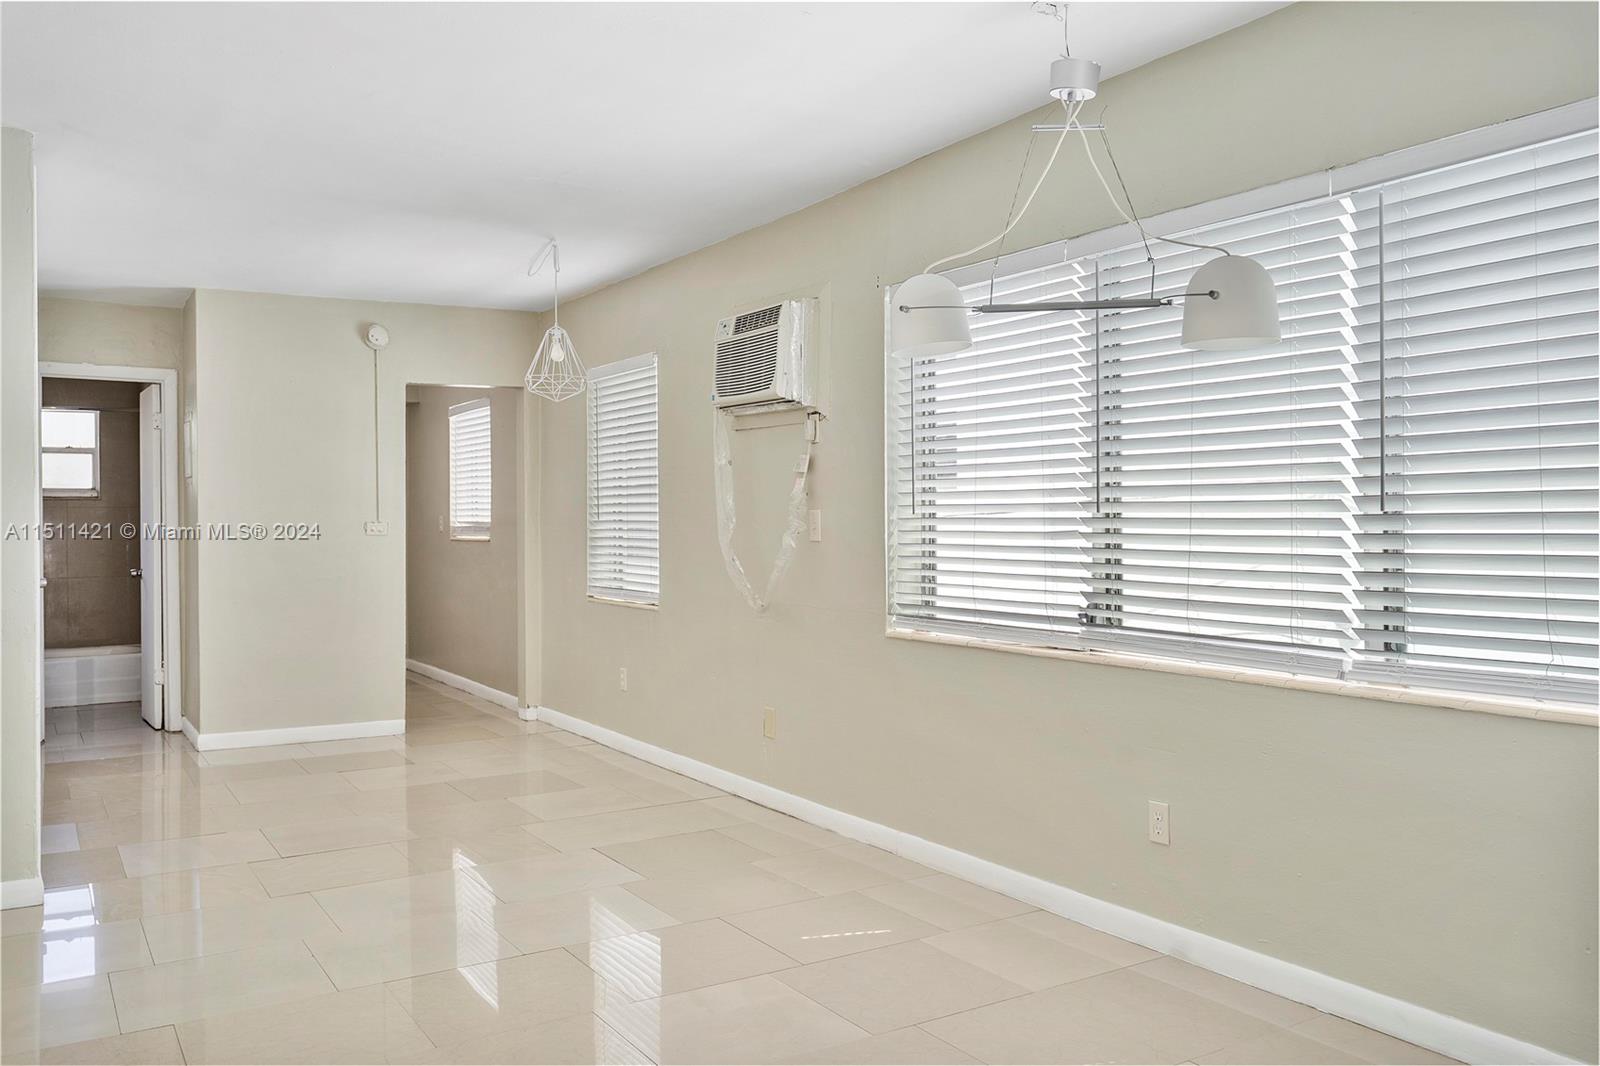 Rental Property at 1685 Jefferson Ave 21, Miami Beach, Miami-Dade County, Florida - Bathrooms: 1  - $1,950 MO.